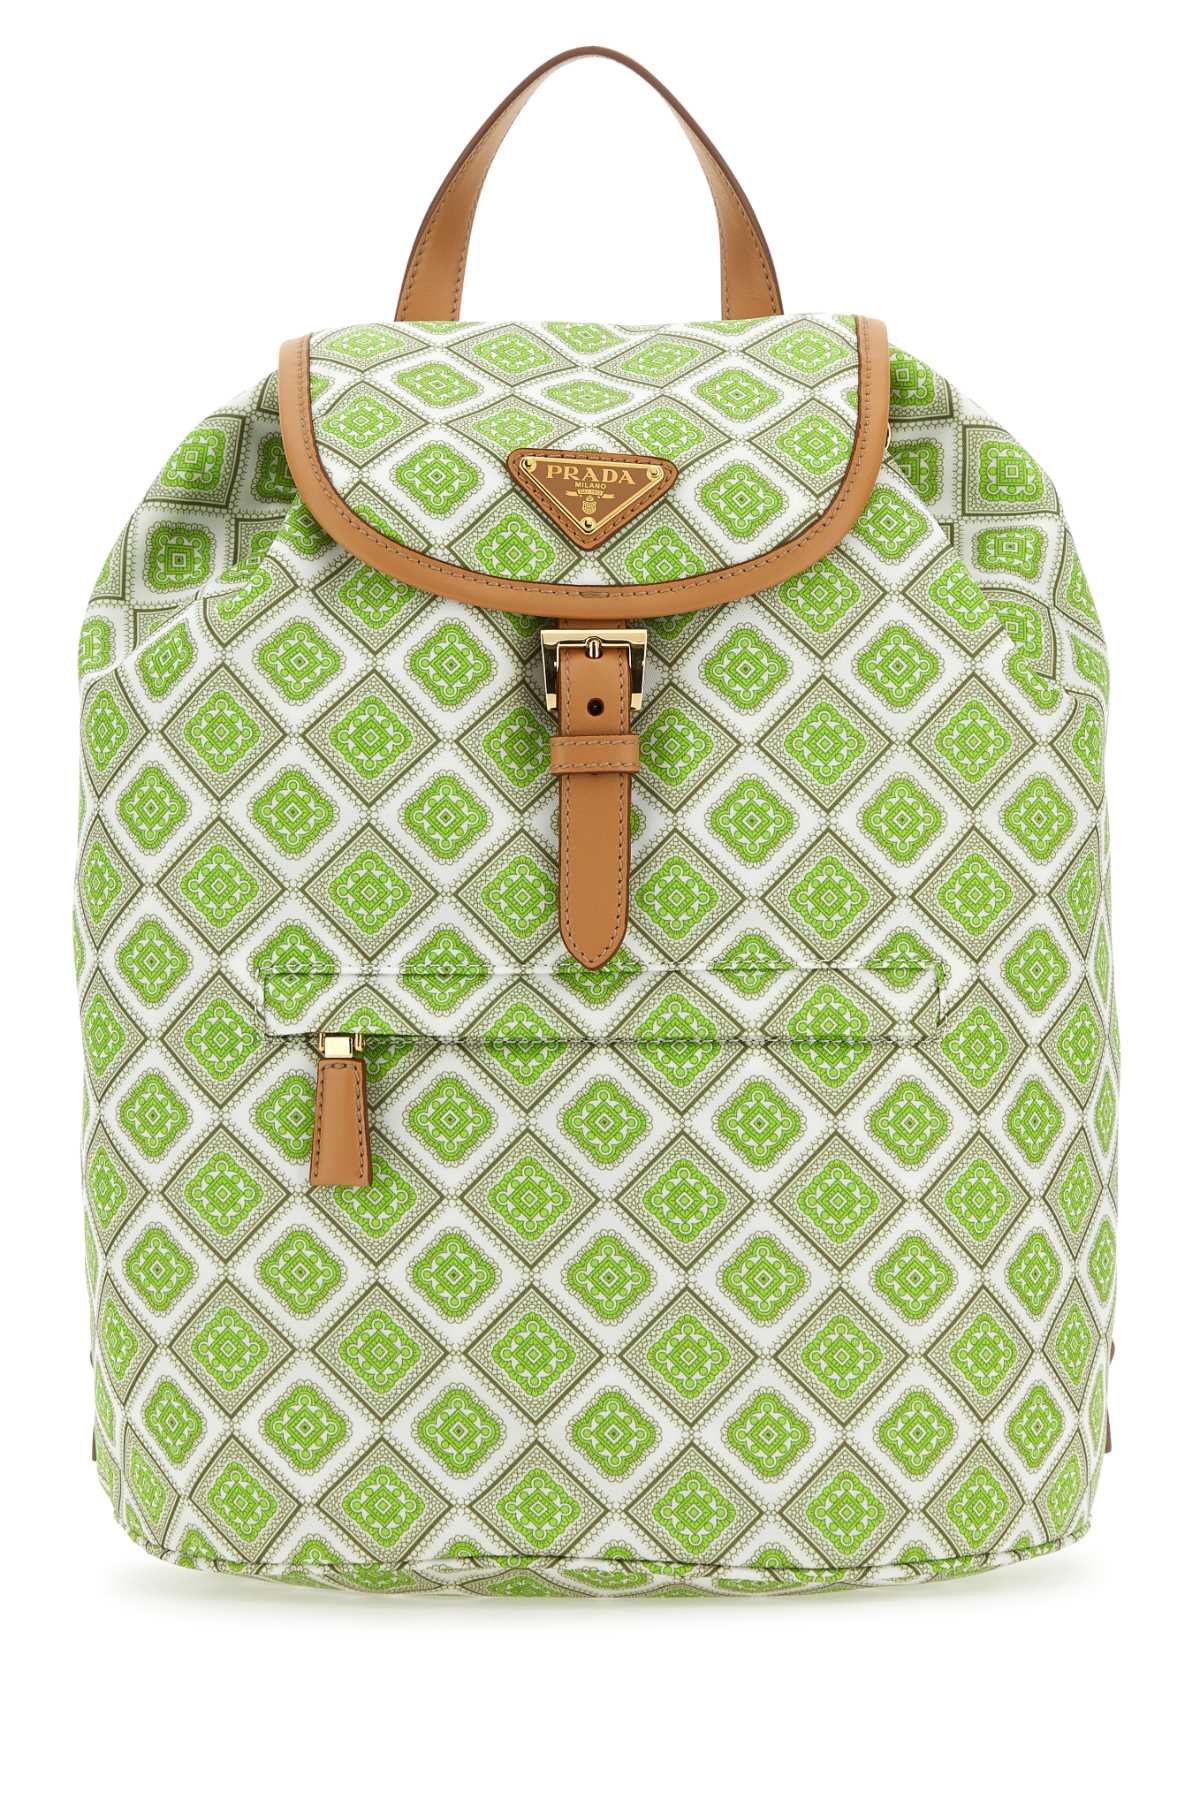 Prada Printed Re-nylon Backpack